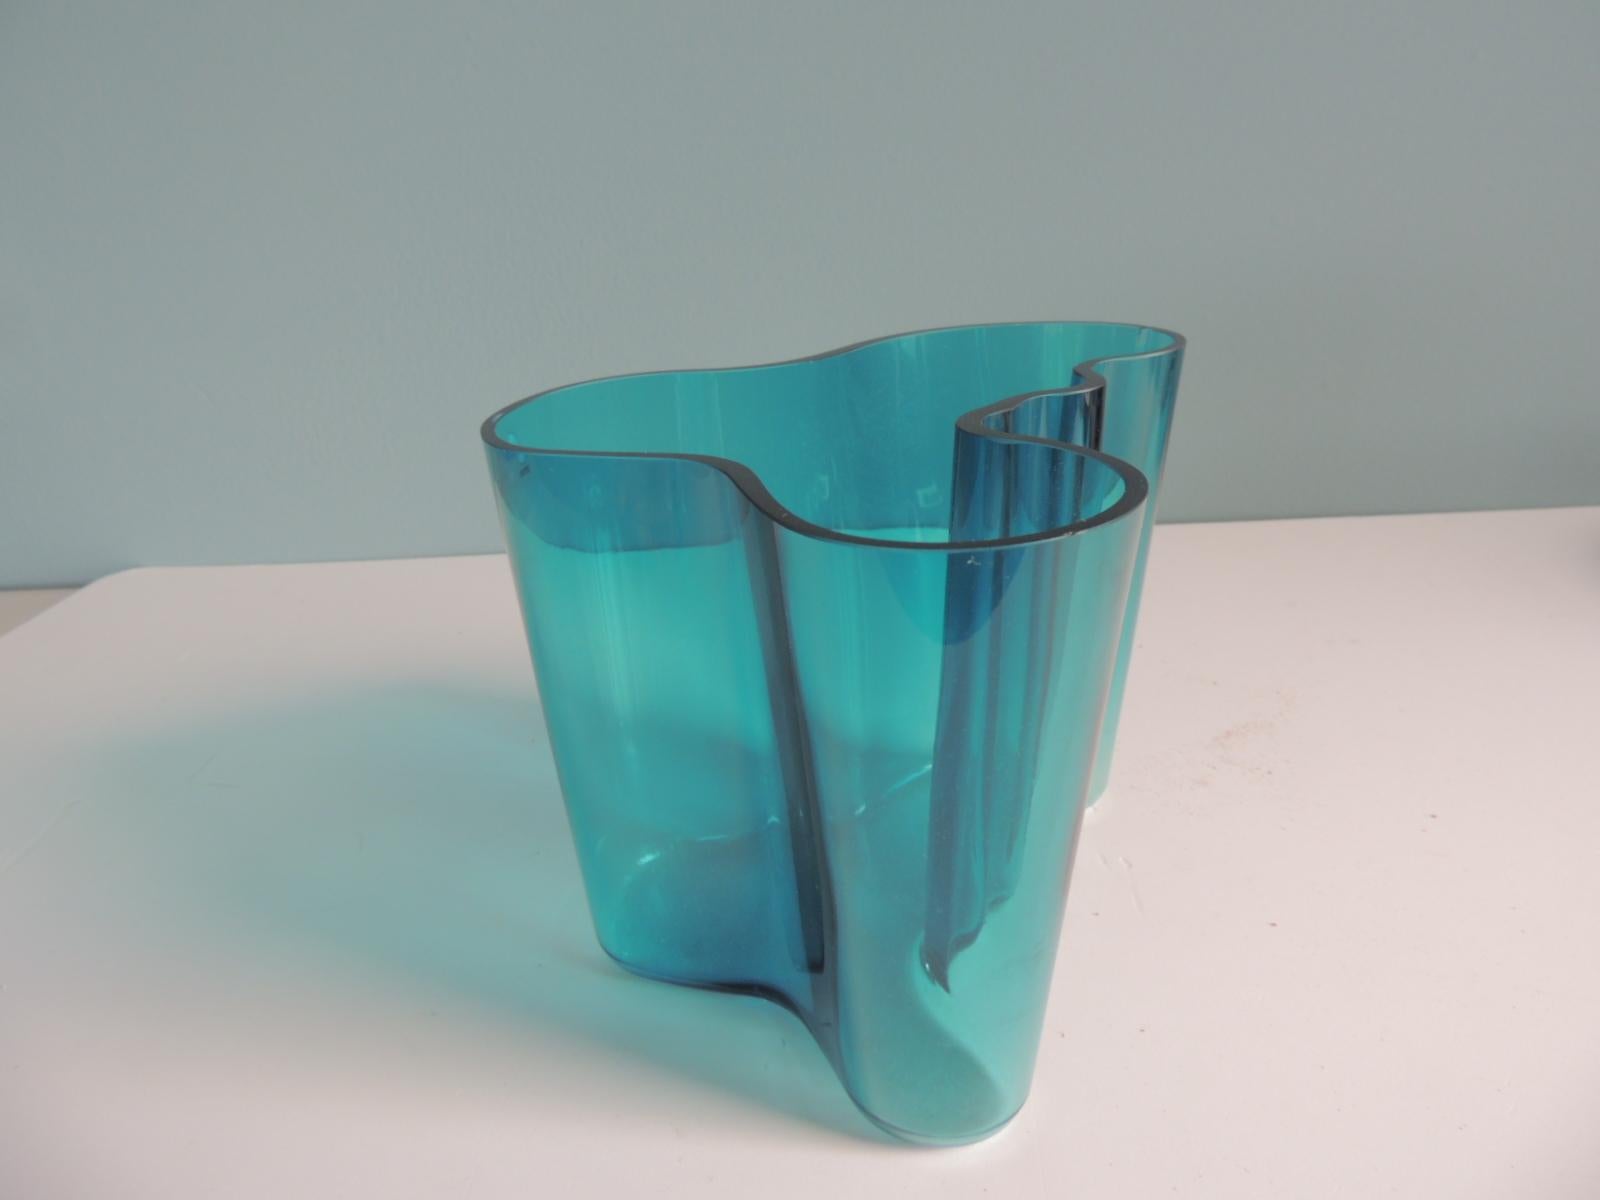 Green Alvar Aalto vase for iittala.
Undulating shape vase
Vase on 1936 original design.
Size: 8